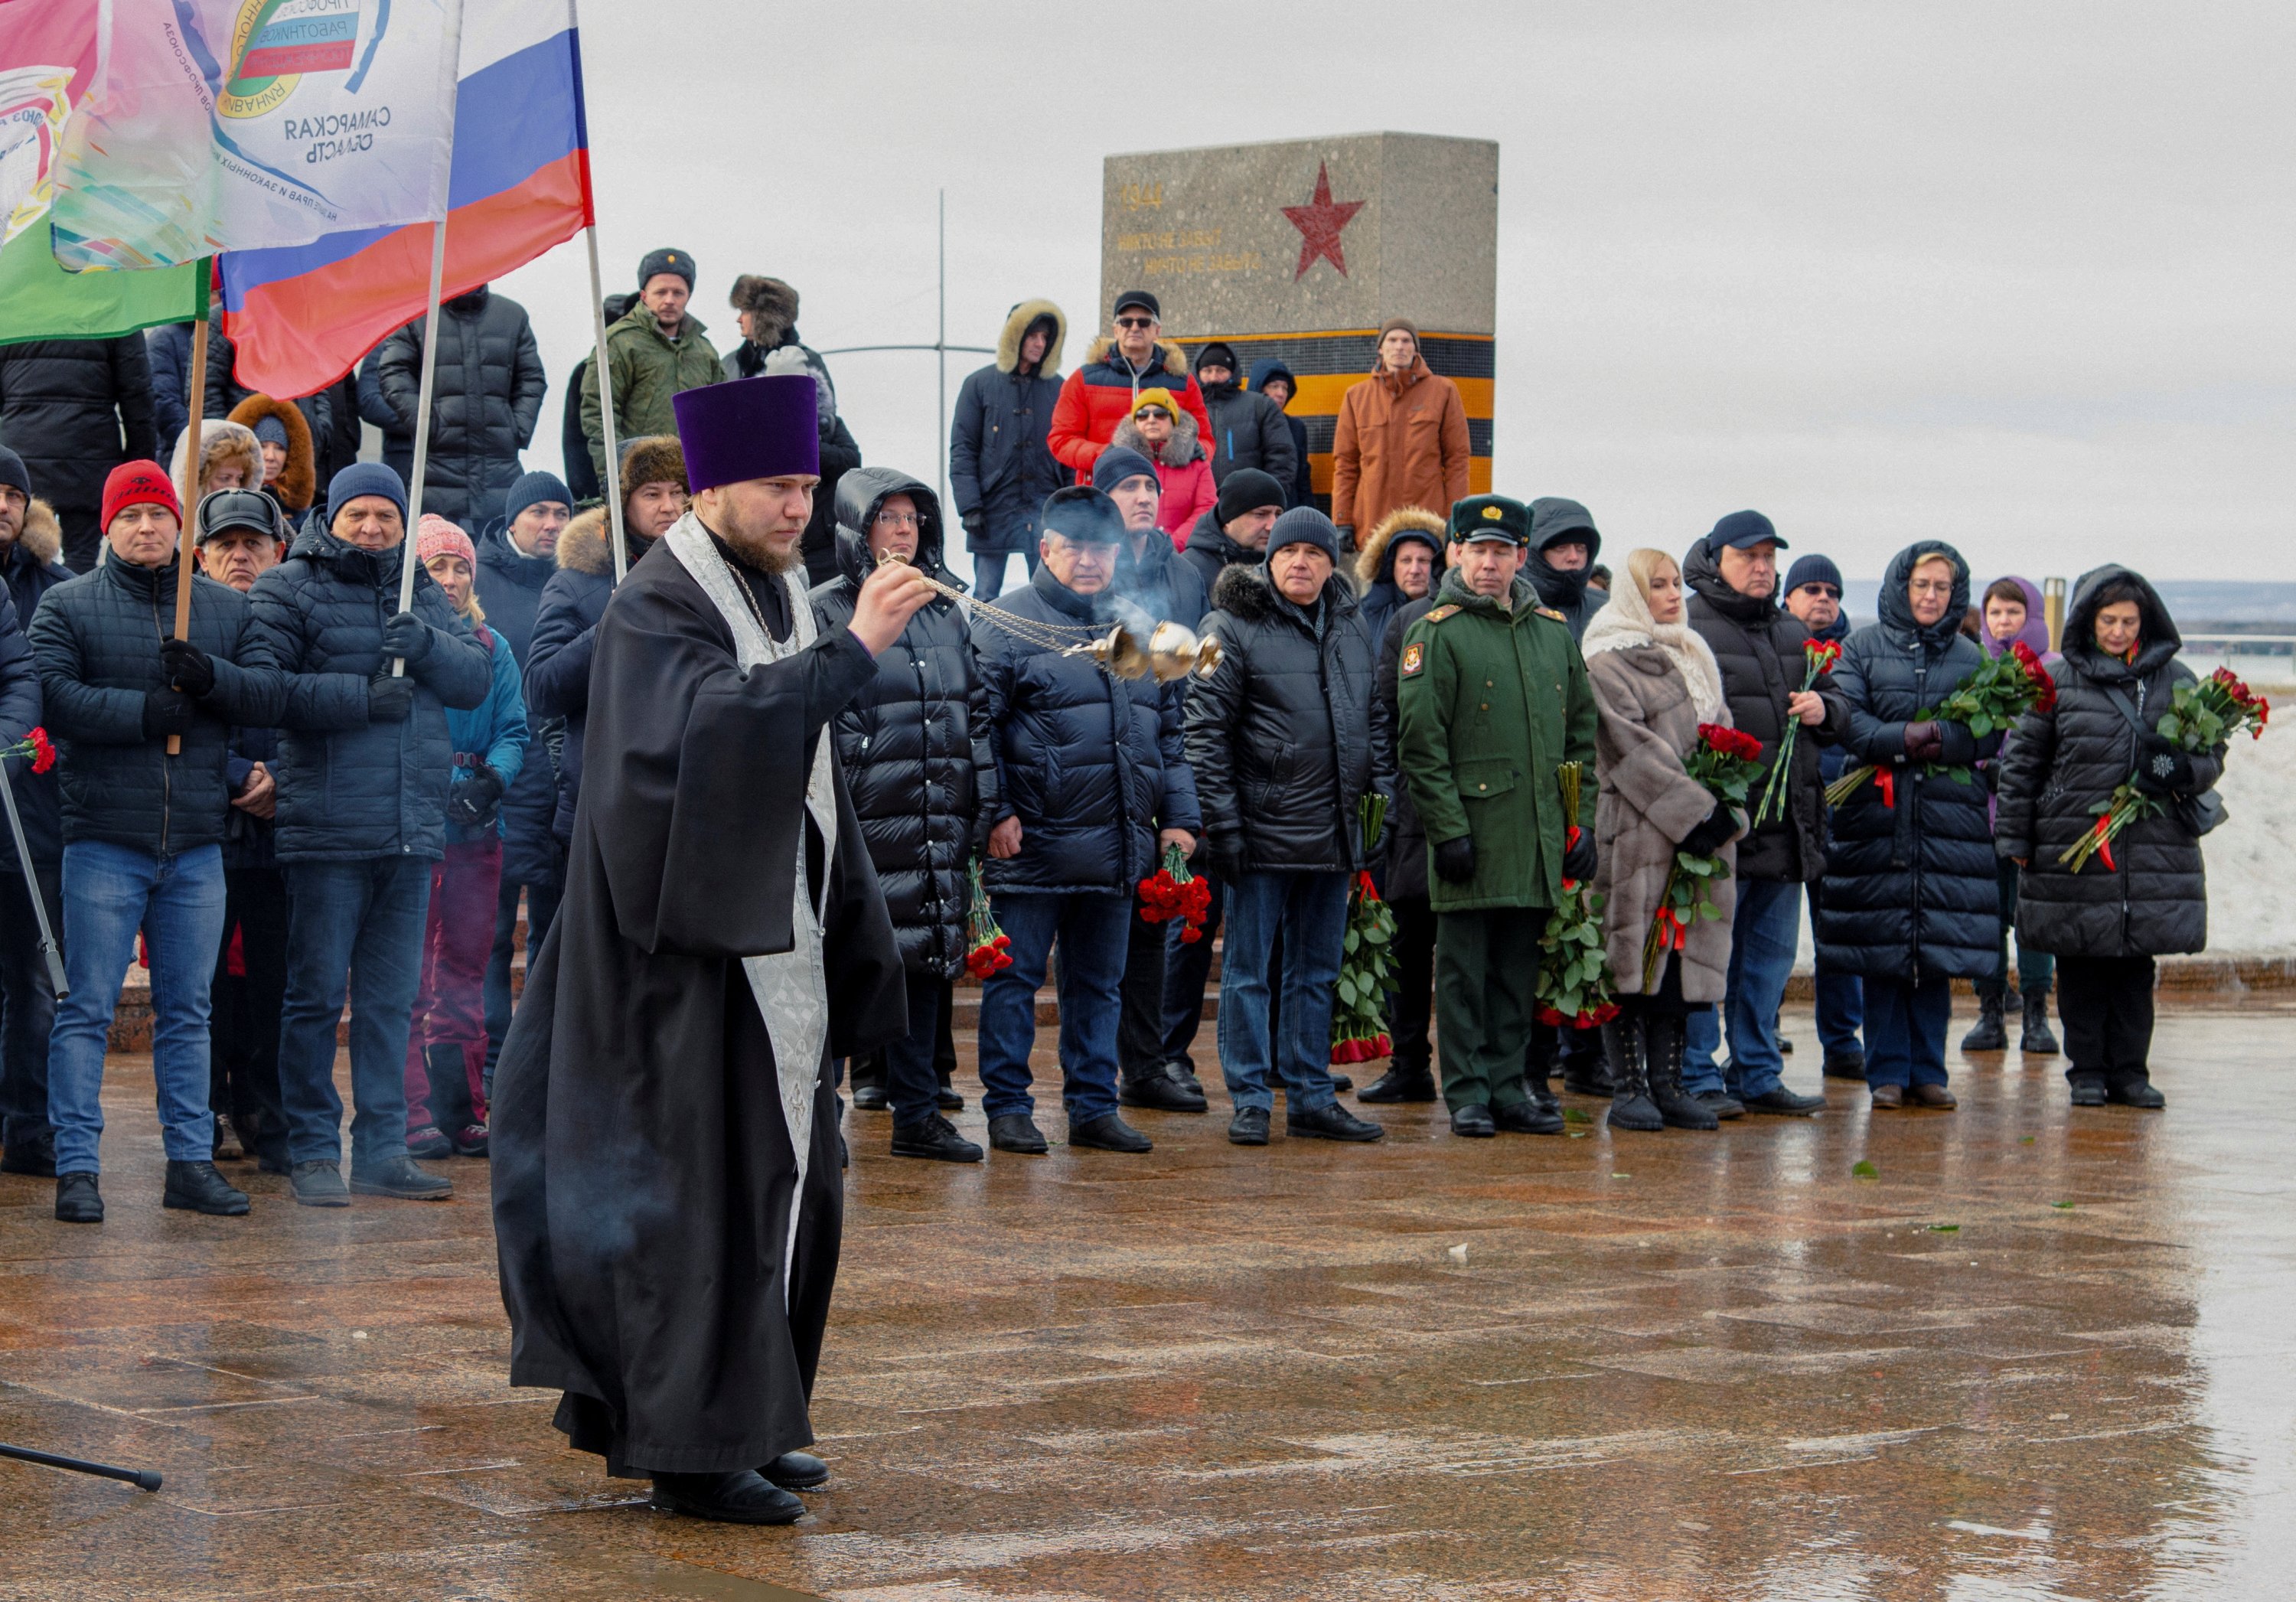 Seorang pendeta melakukan kebaktian selama upacara di peringatan Api abadi untuk mengenang lebih dari 60 tentara Rusia yang tewas dalam serangan Ukraina, Samara, Rusia, 3 Januari 2023. (Foto AFP)